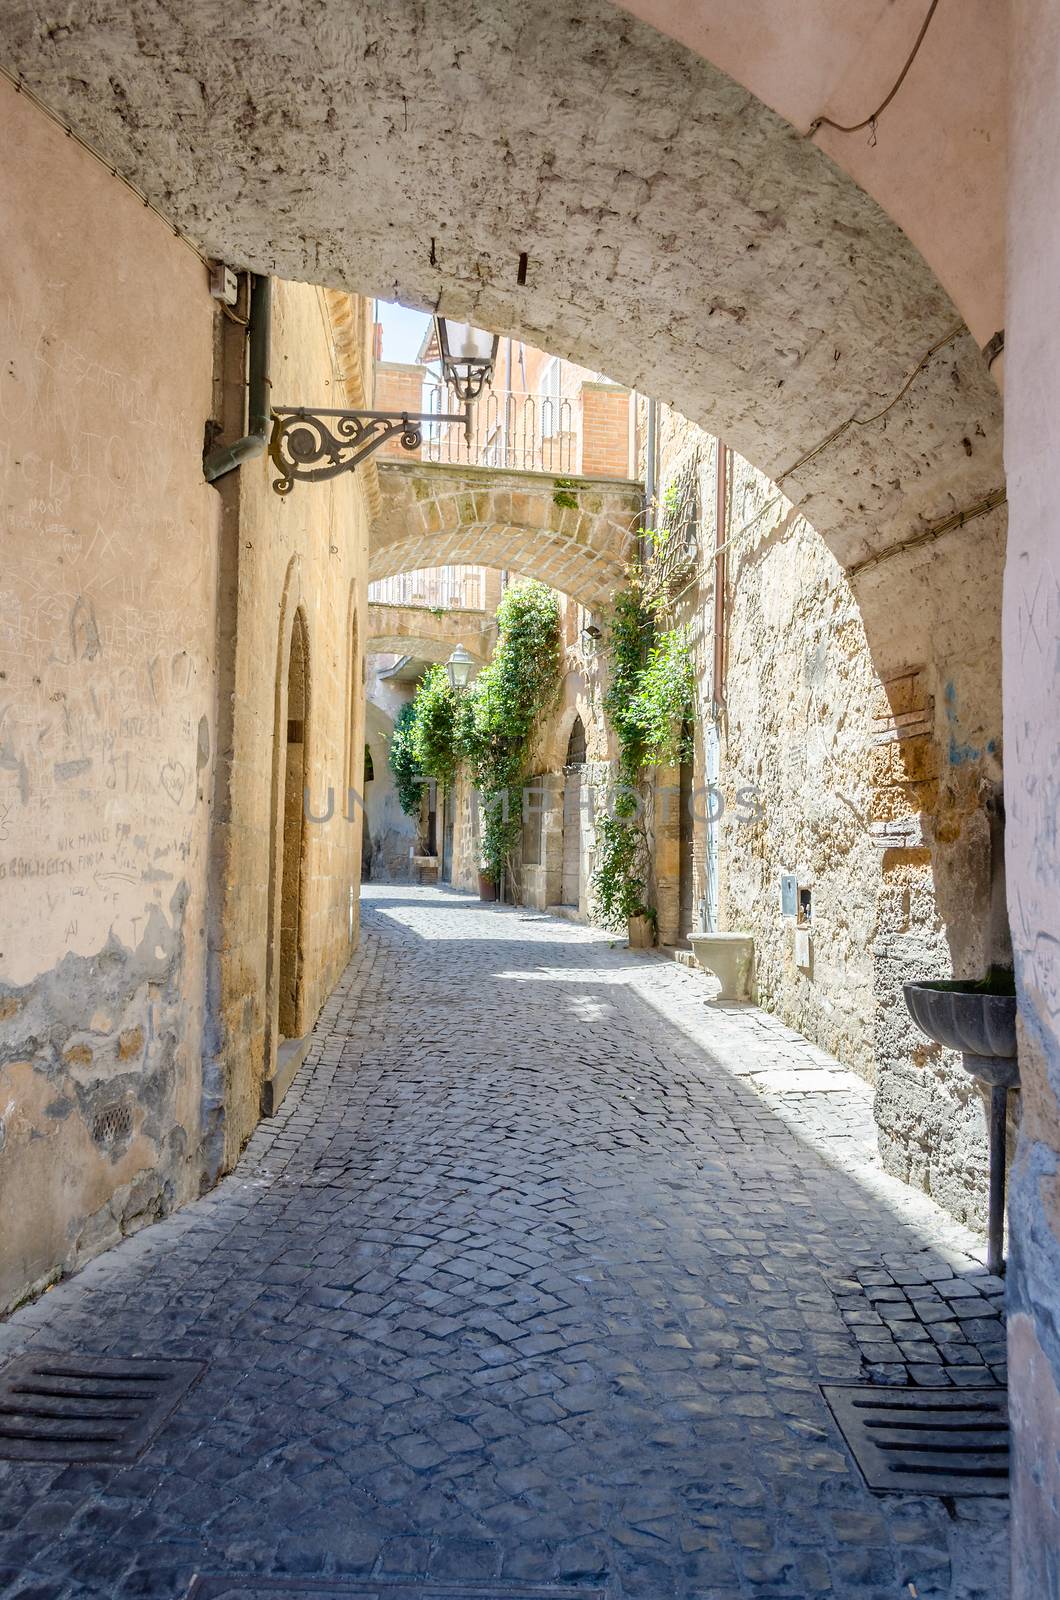 Ancient Alley by marcorubino